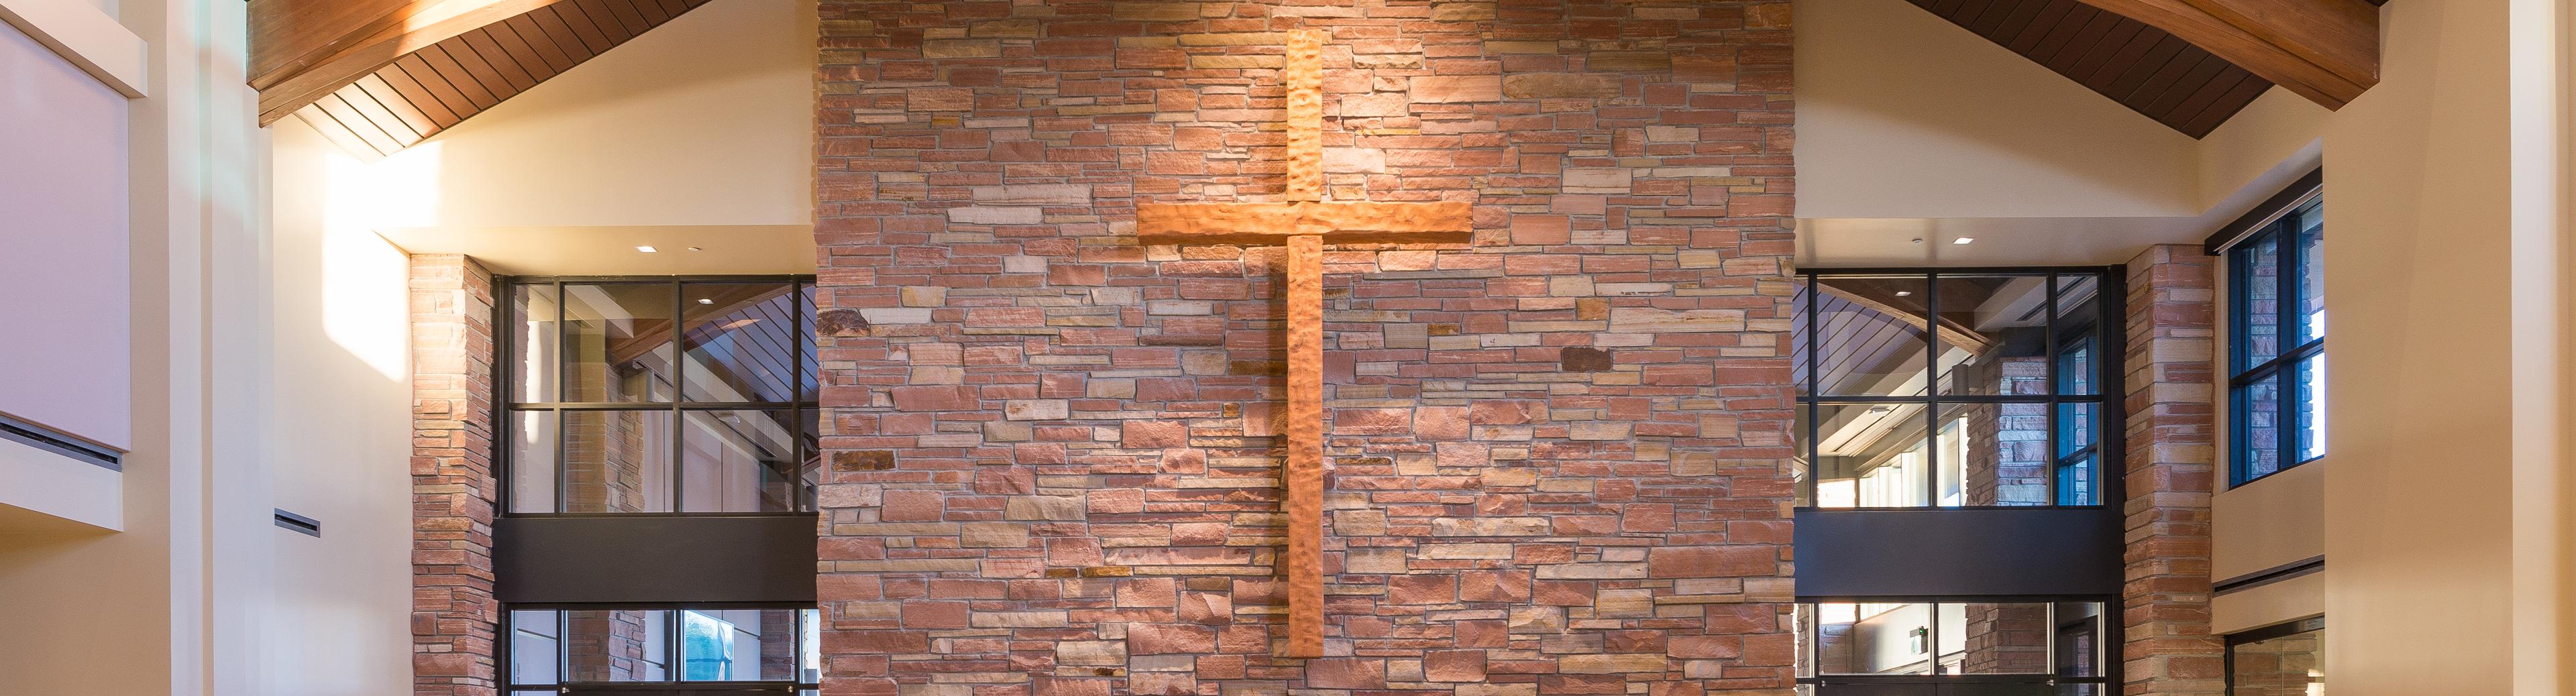 Cross in the wall